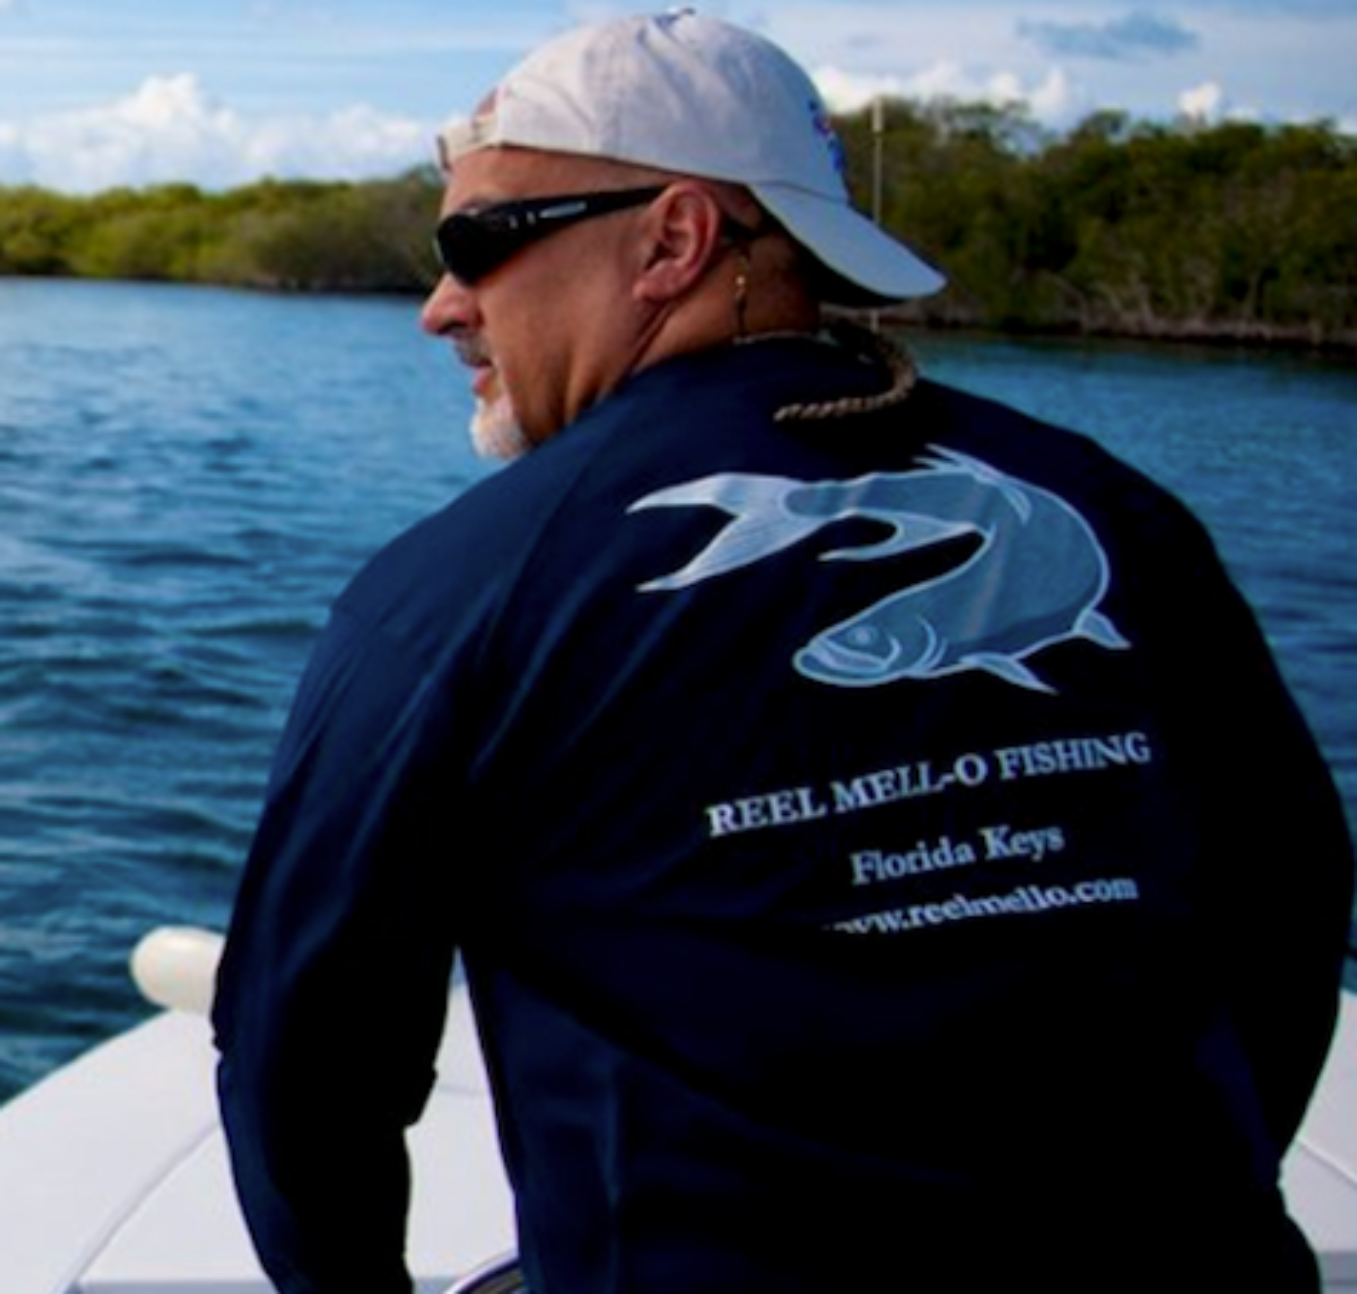 Reel Mell-O Long Sleeve Fishing Shirt